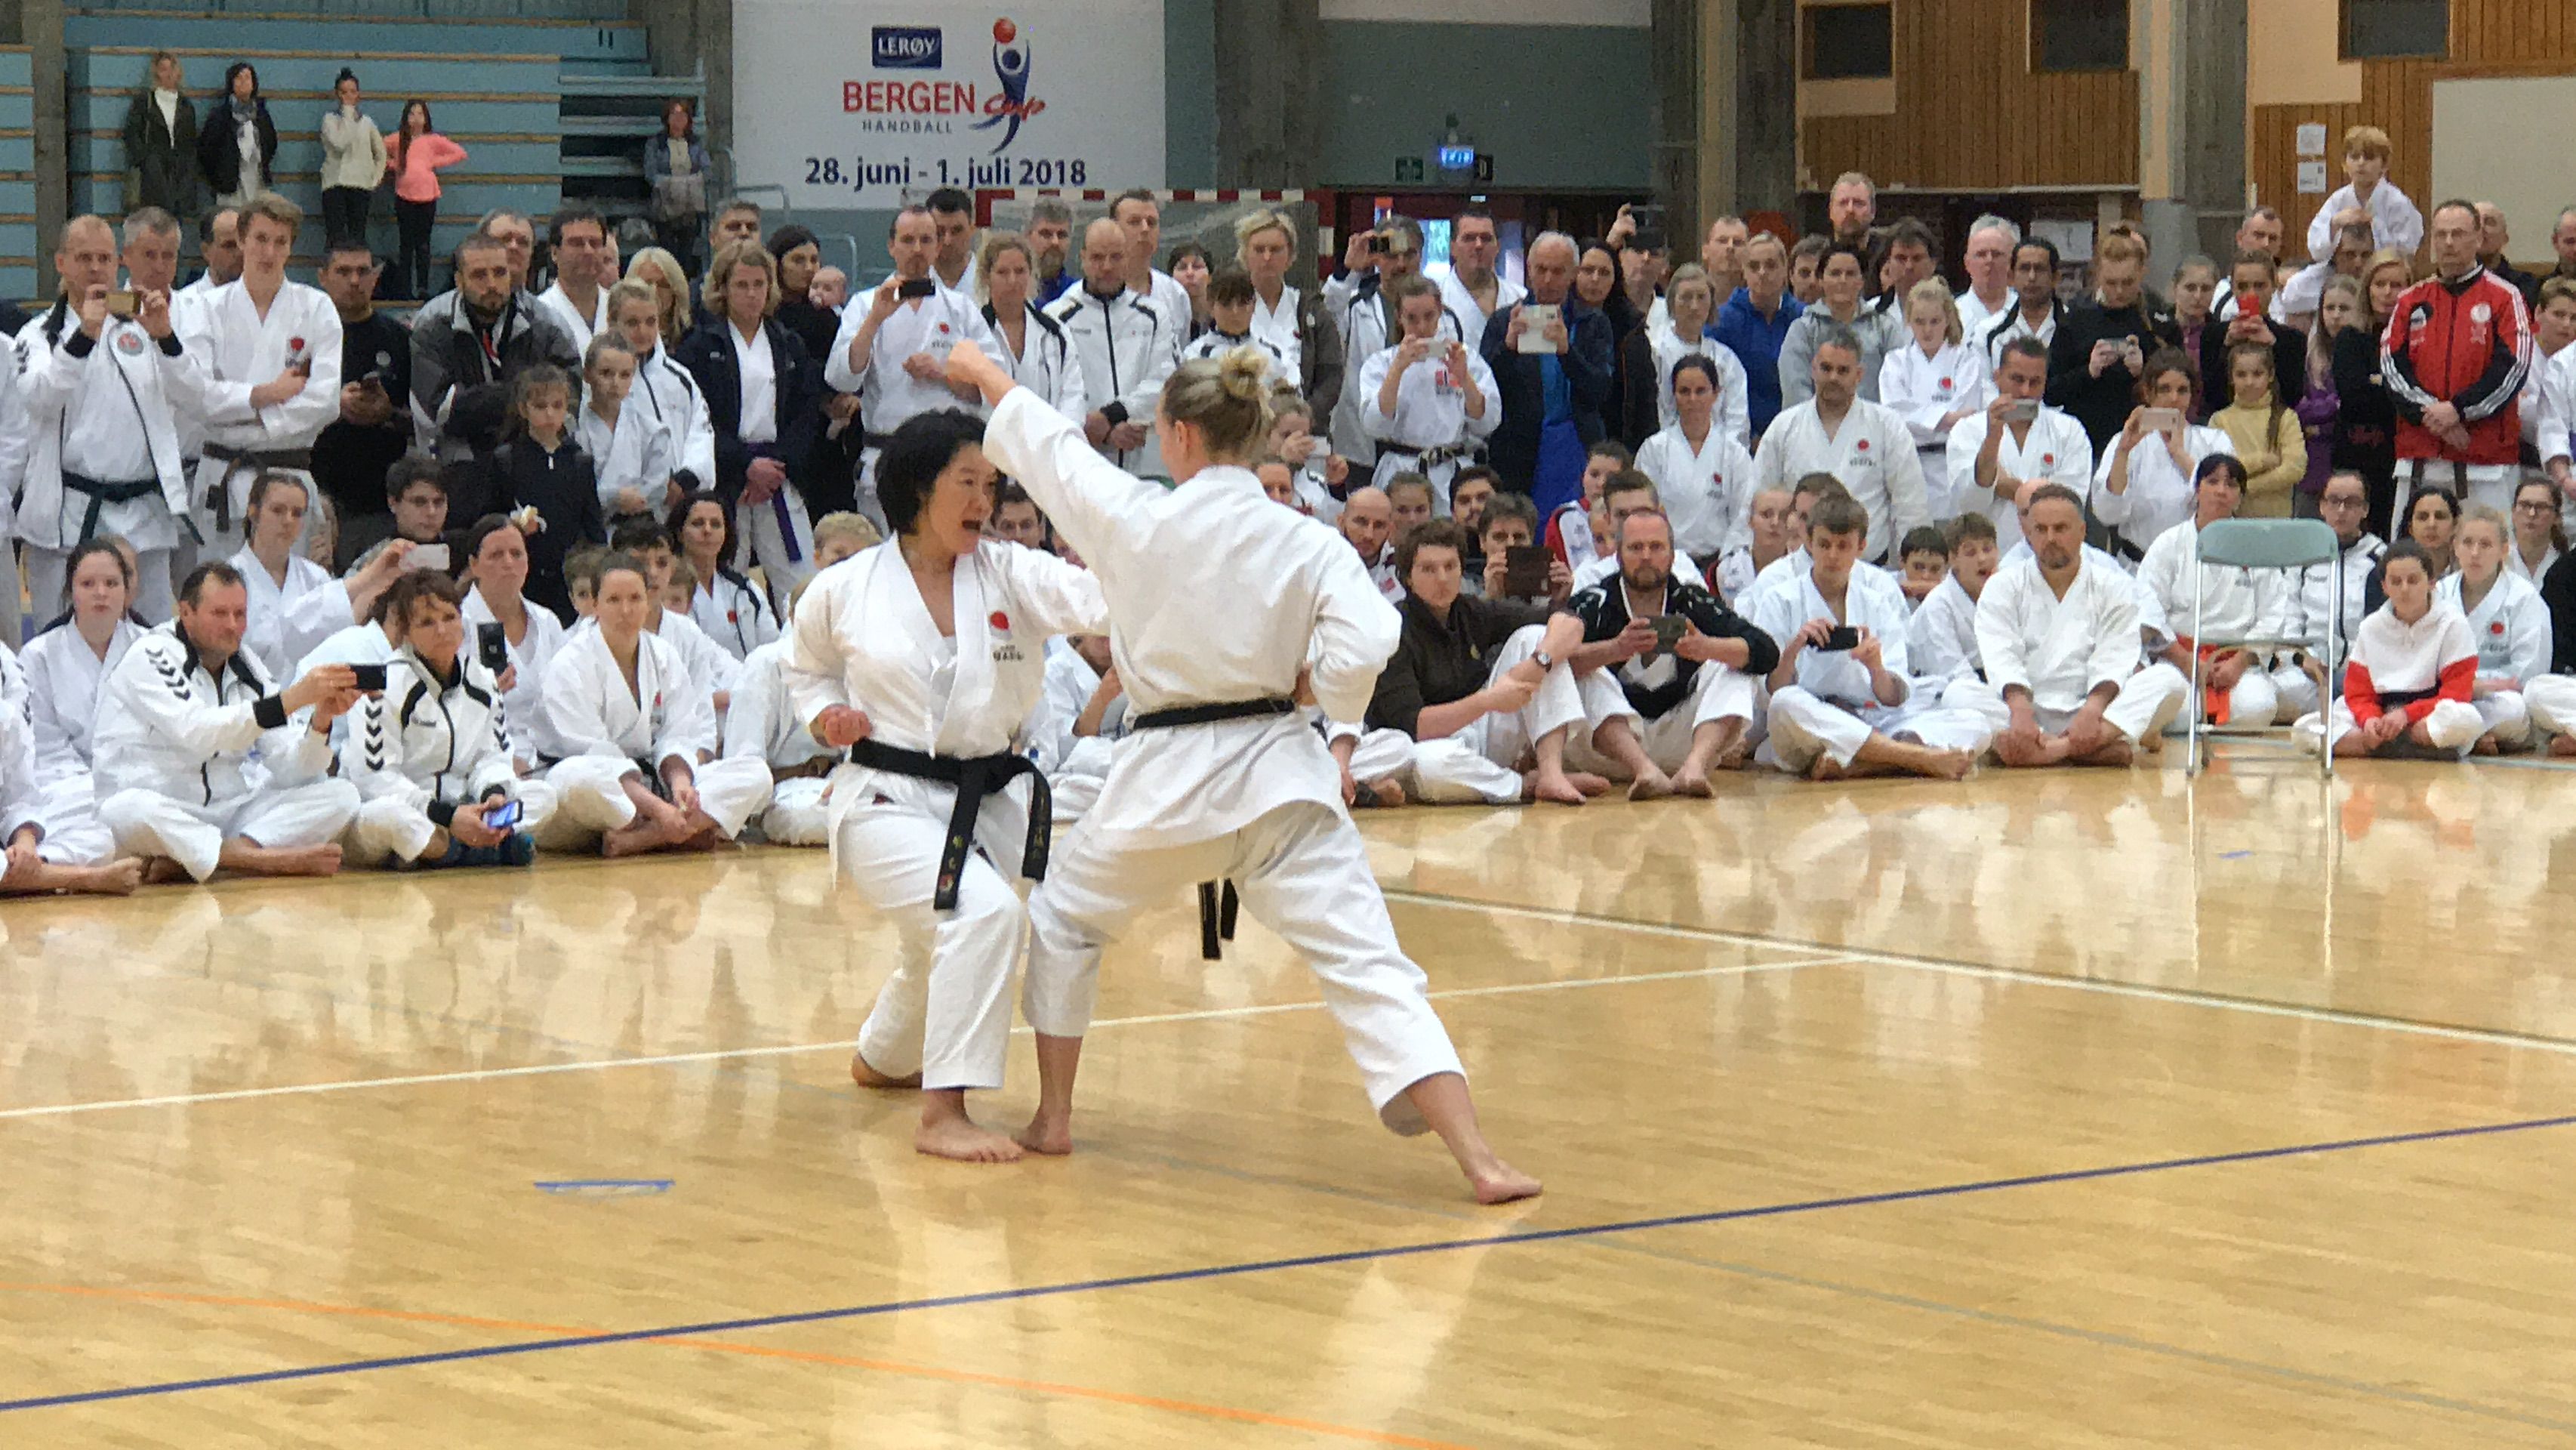 karate-shotokan-kata-kumite-t-cnicas-cinturones-y-m-s